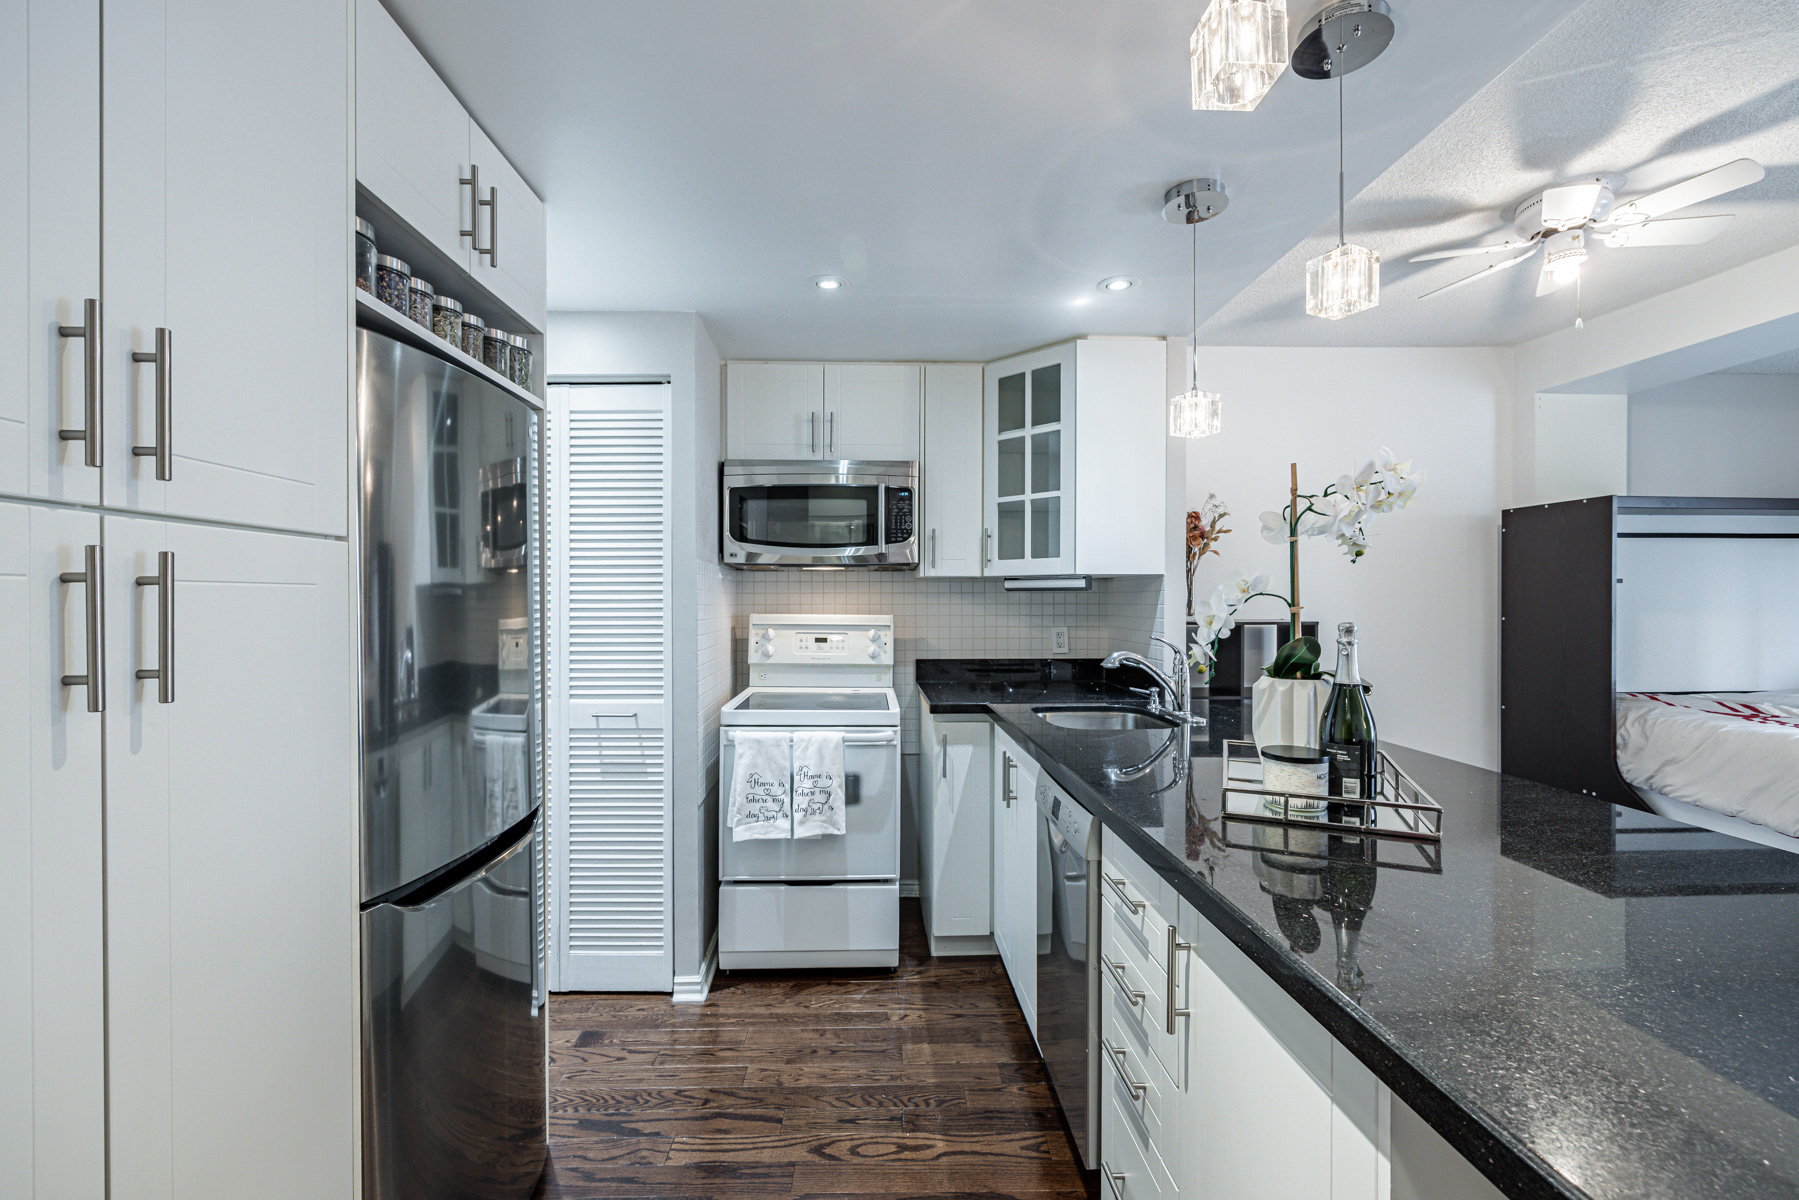 Condo kitchen with black granite counters, dark hardwood floors & white cabinets.